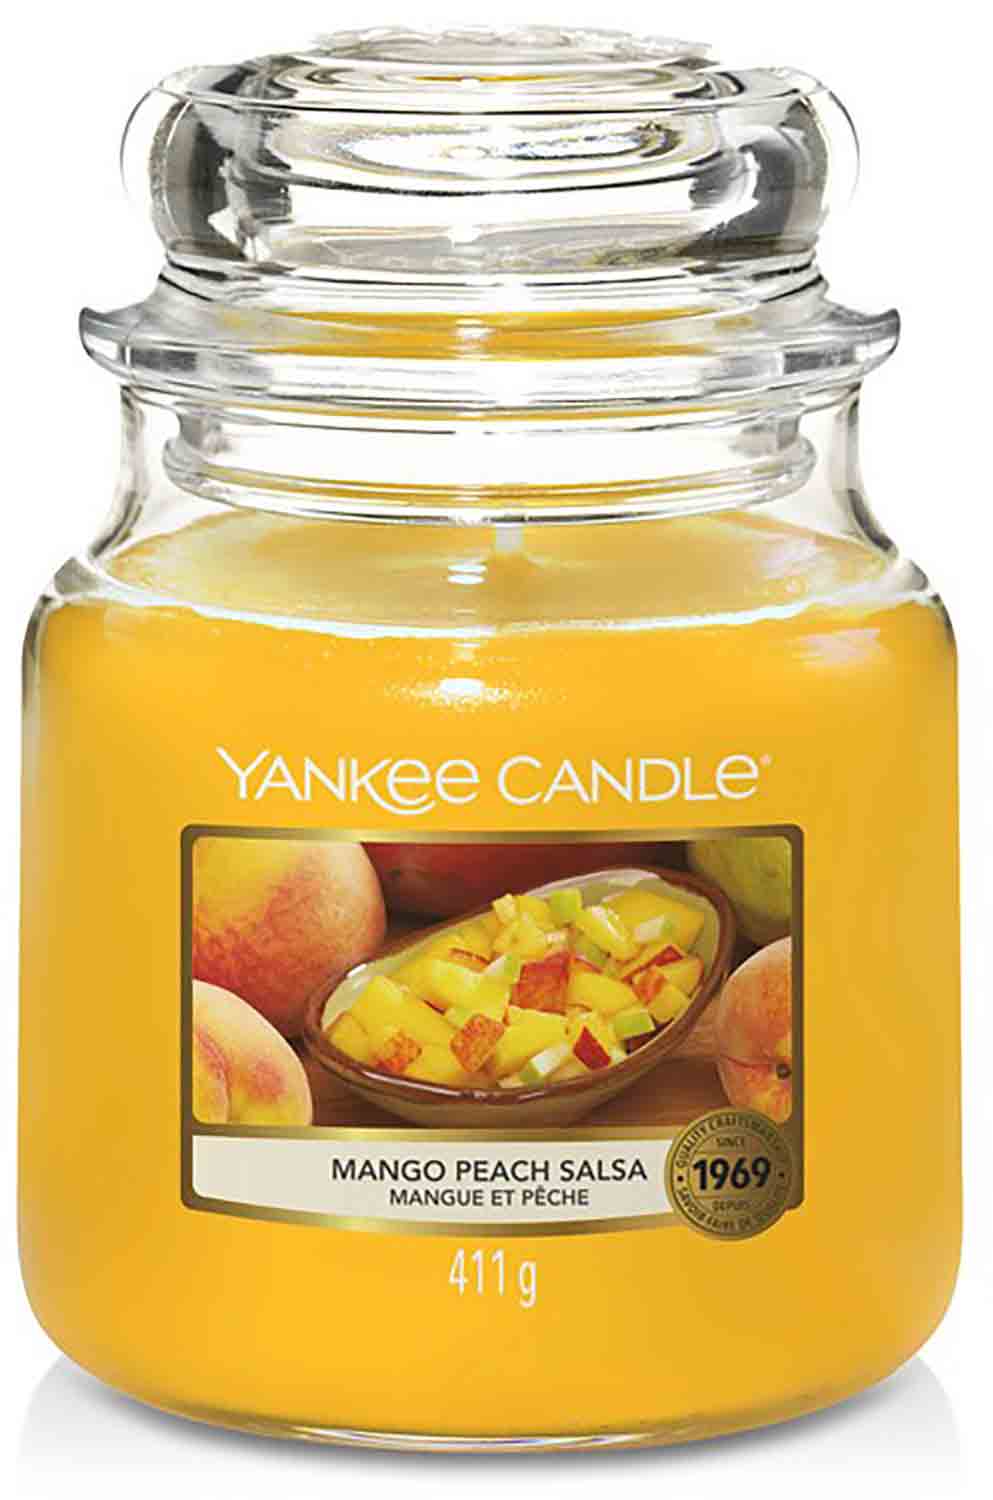 Yankee Candle Mango Peach Salsa 411g Assorted